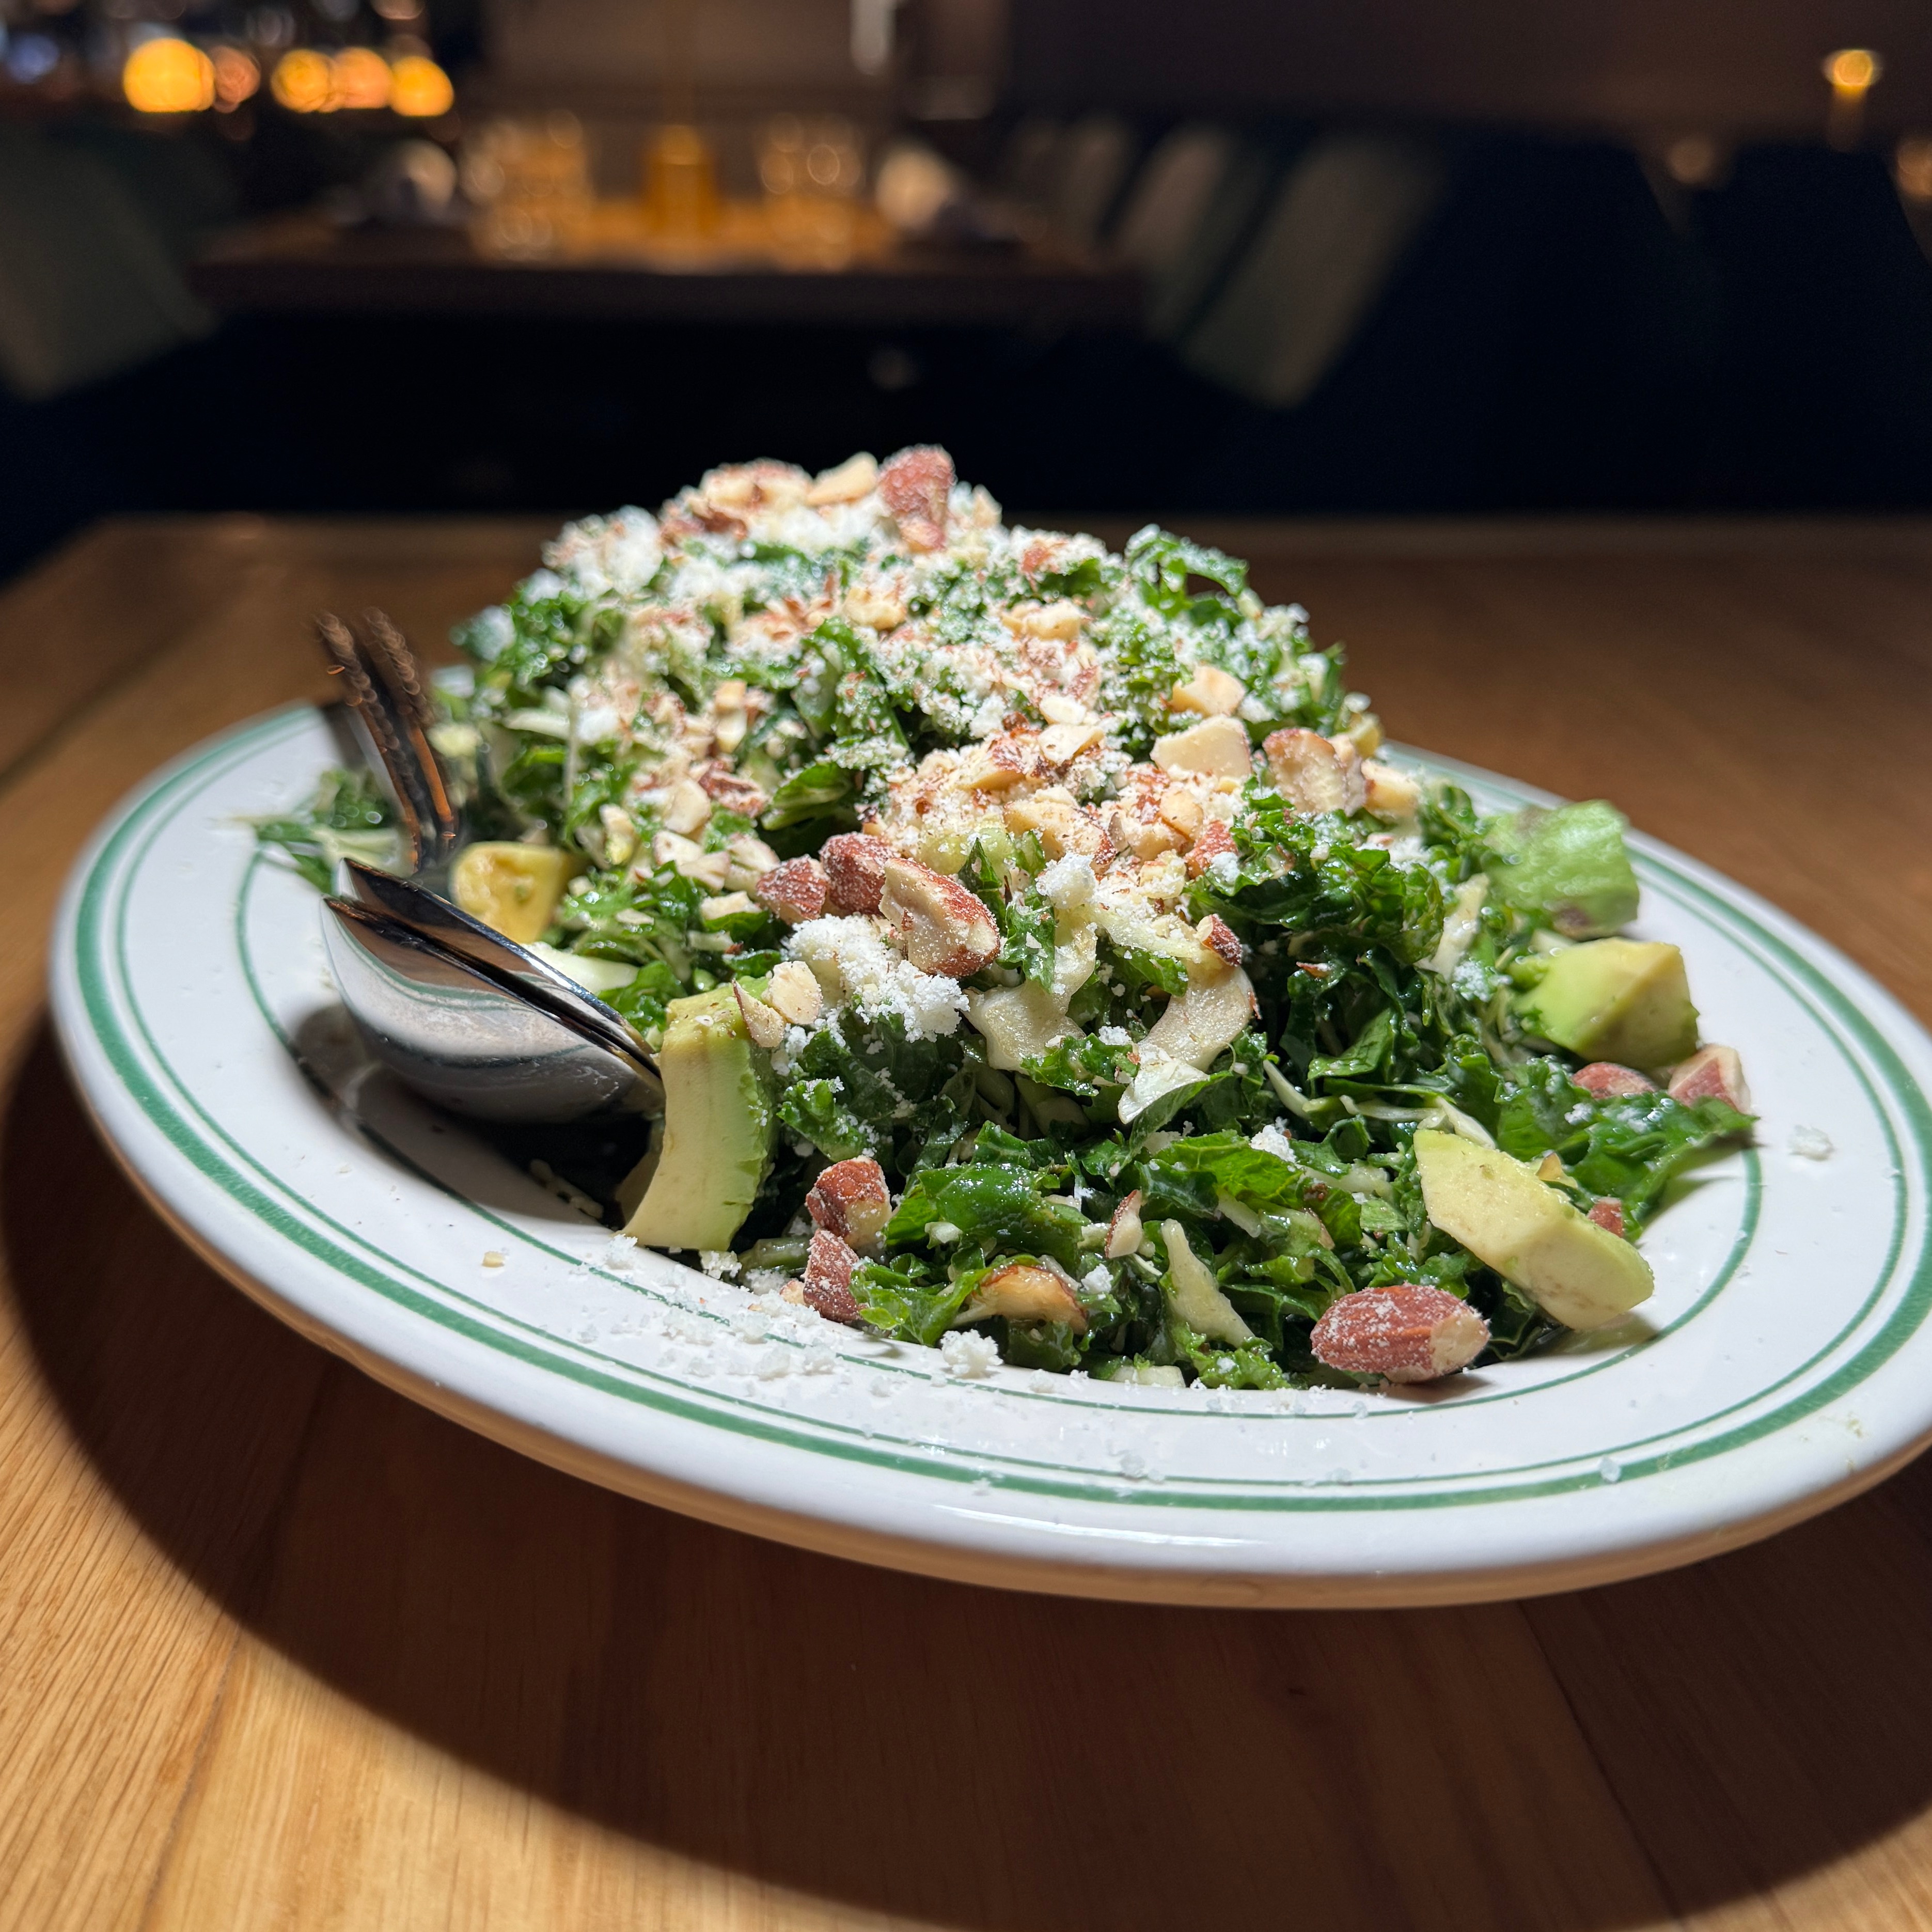 Jame's Kale Salad $17 from Jemma on #foodmento http://foodmento.com/dish/57492